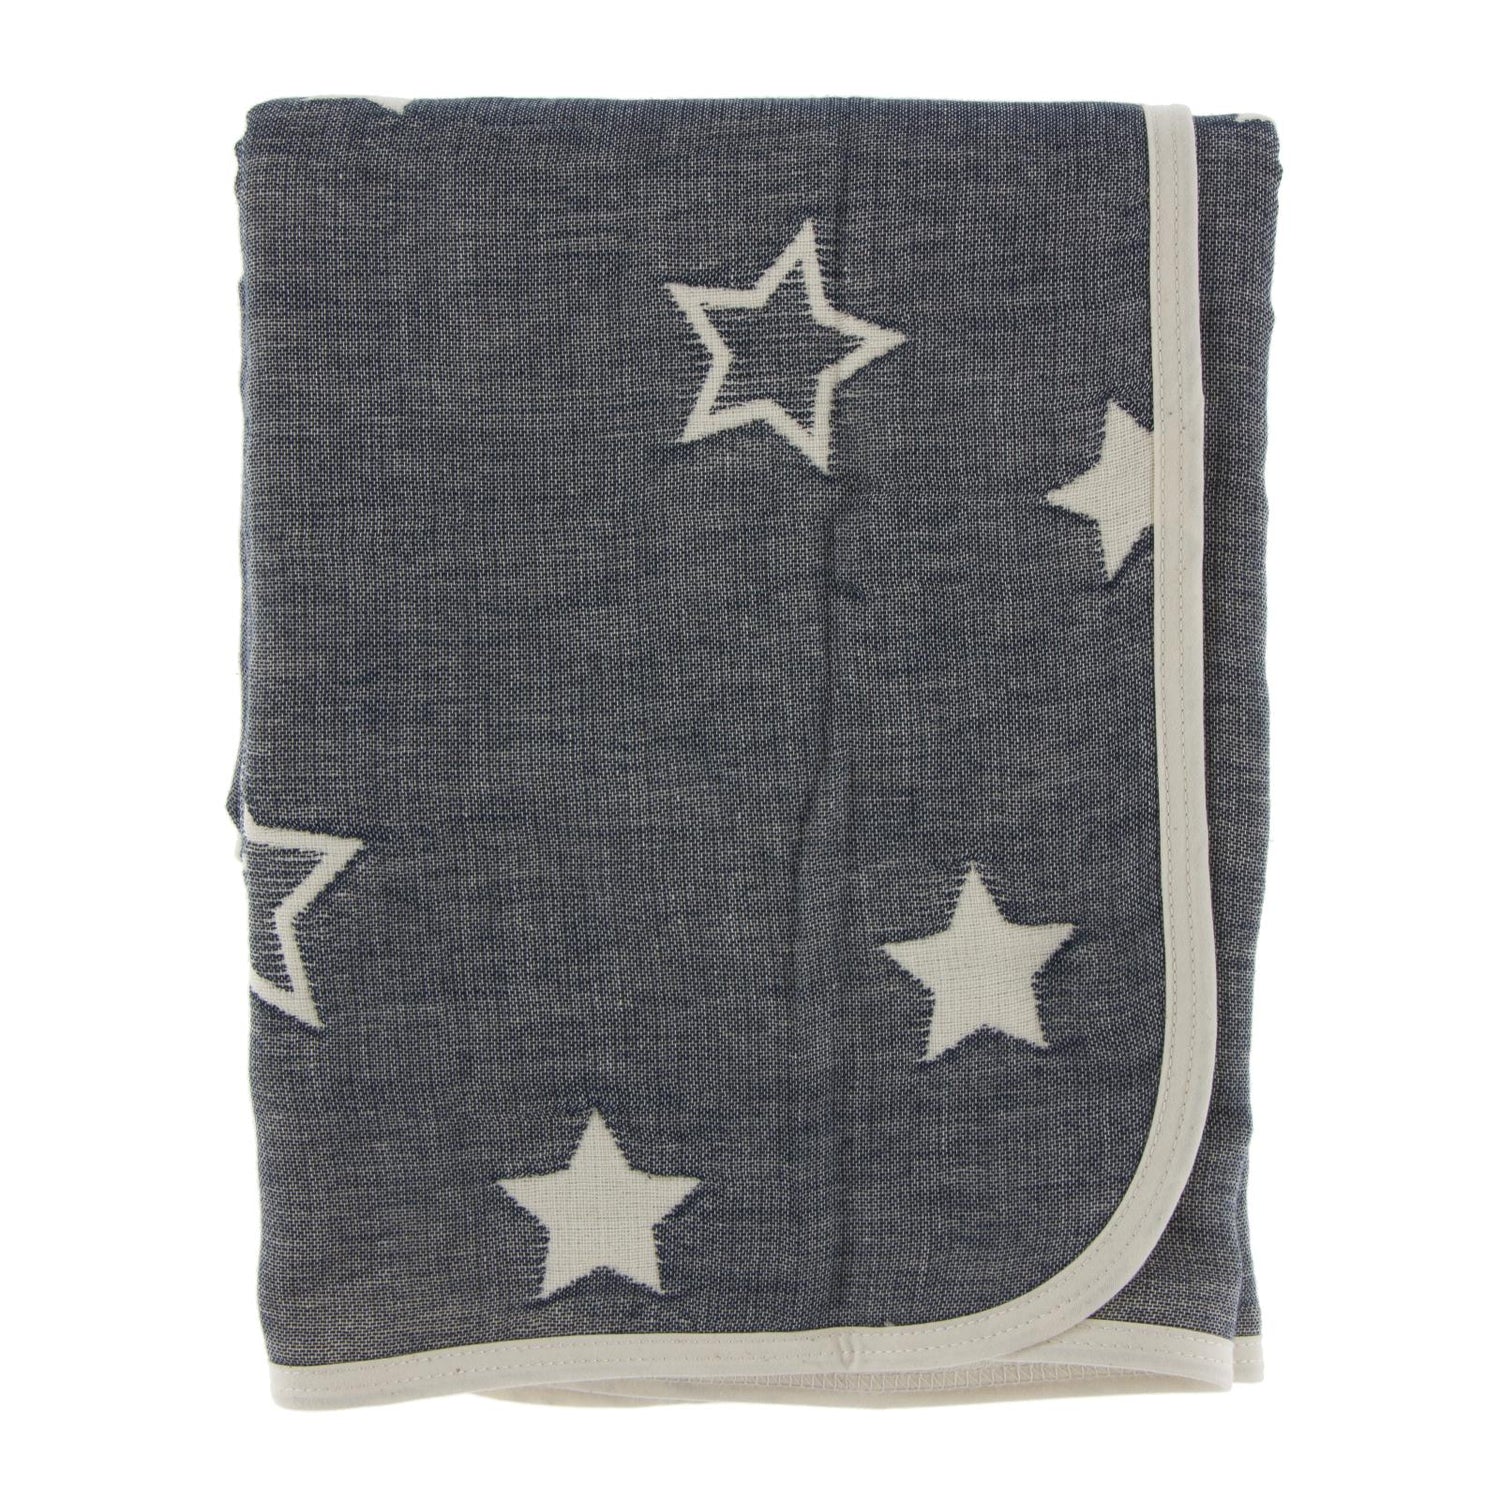 Jacquard Muslin Baby Blanket in Navy Star